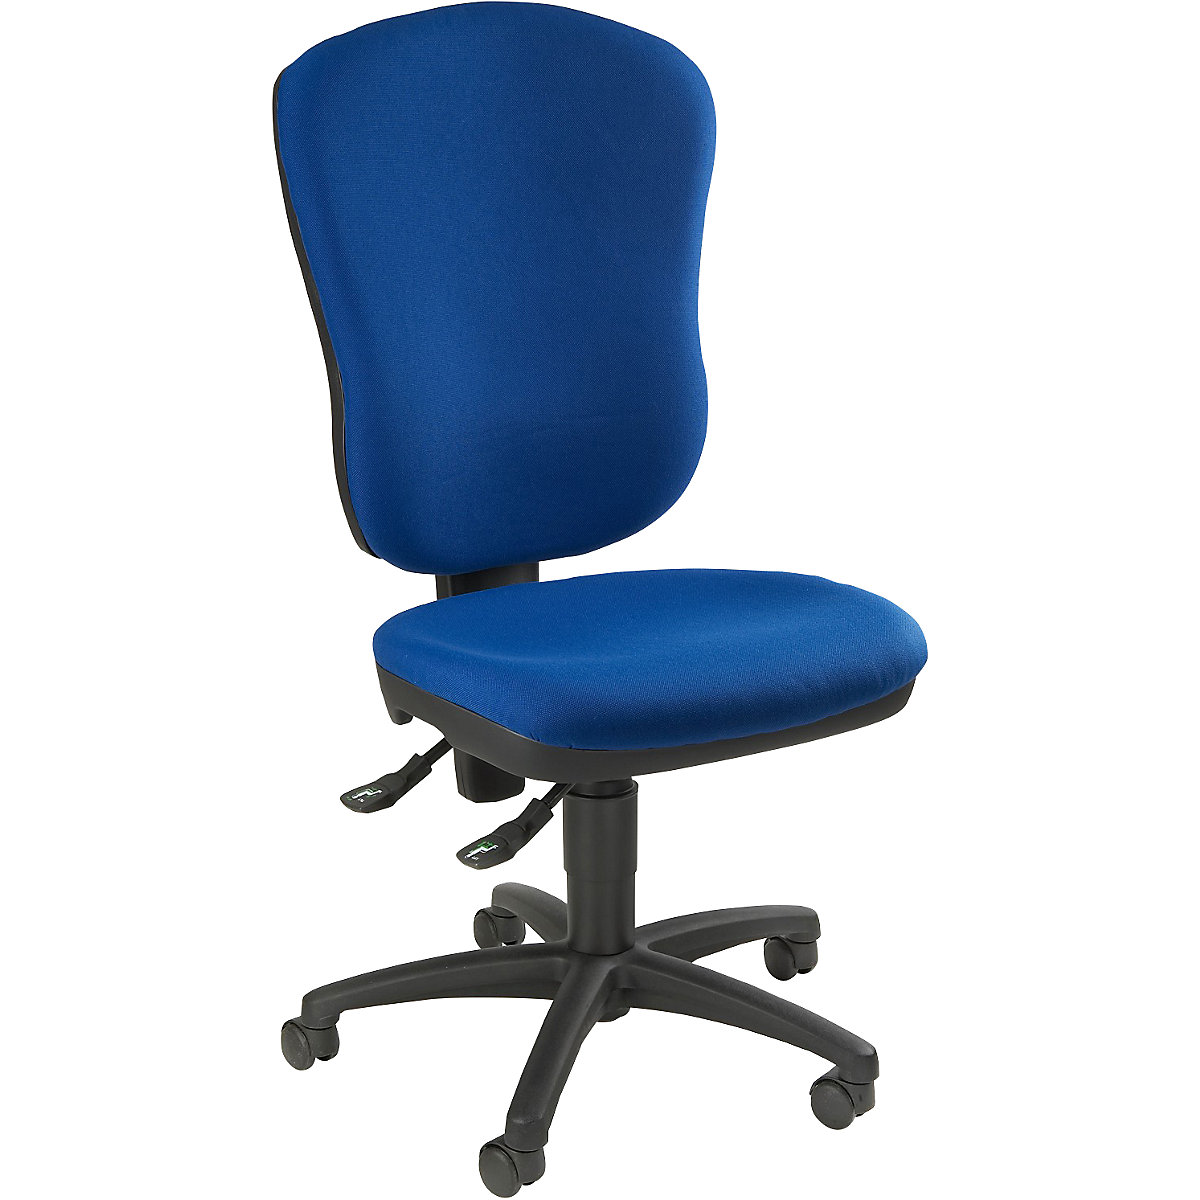 Standardna okretna stolica – Topstar, bez naslona za ruke, s lumbalnom potporom, visina naslona za leđa 570 mm, presvlaka u royal plavoj boji, od 3 kom.-1